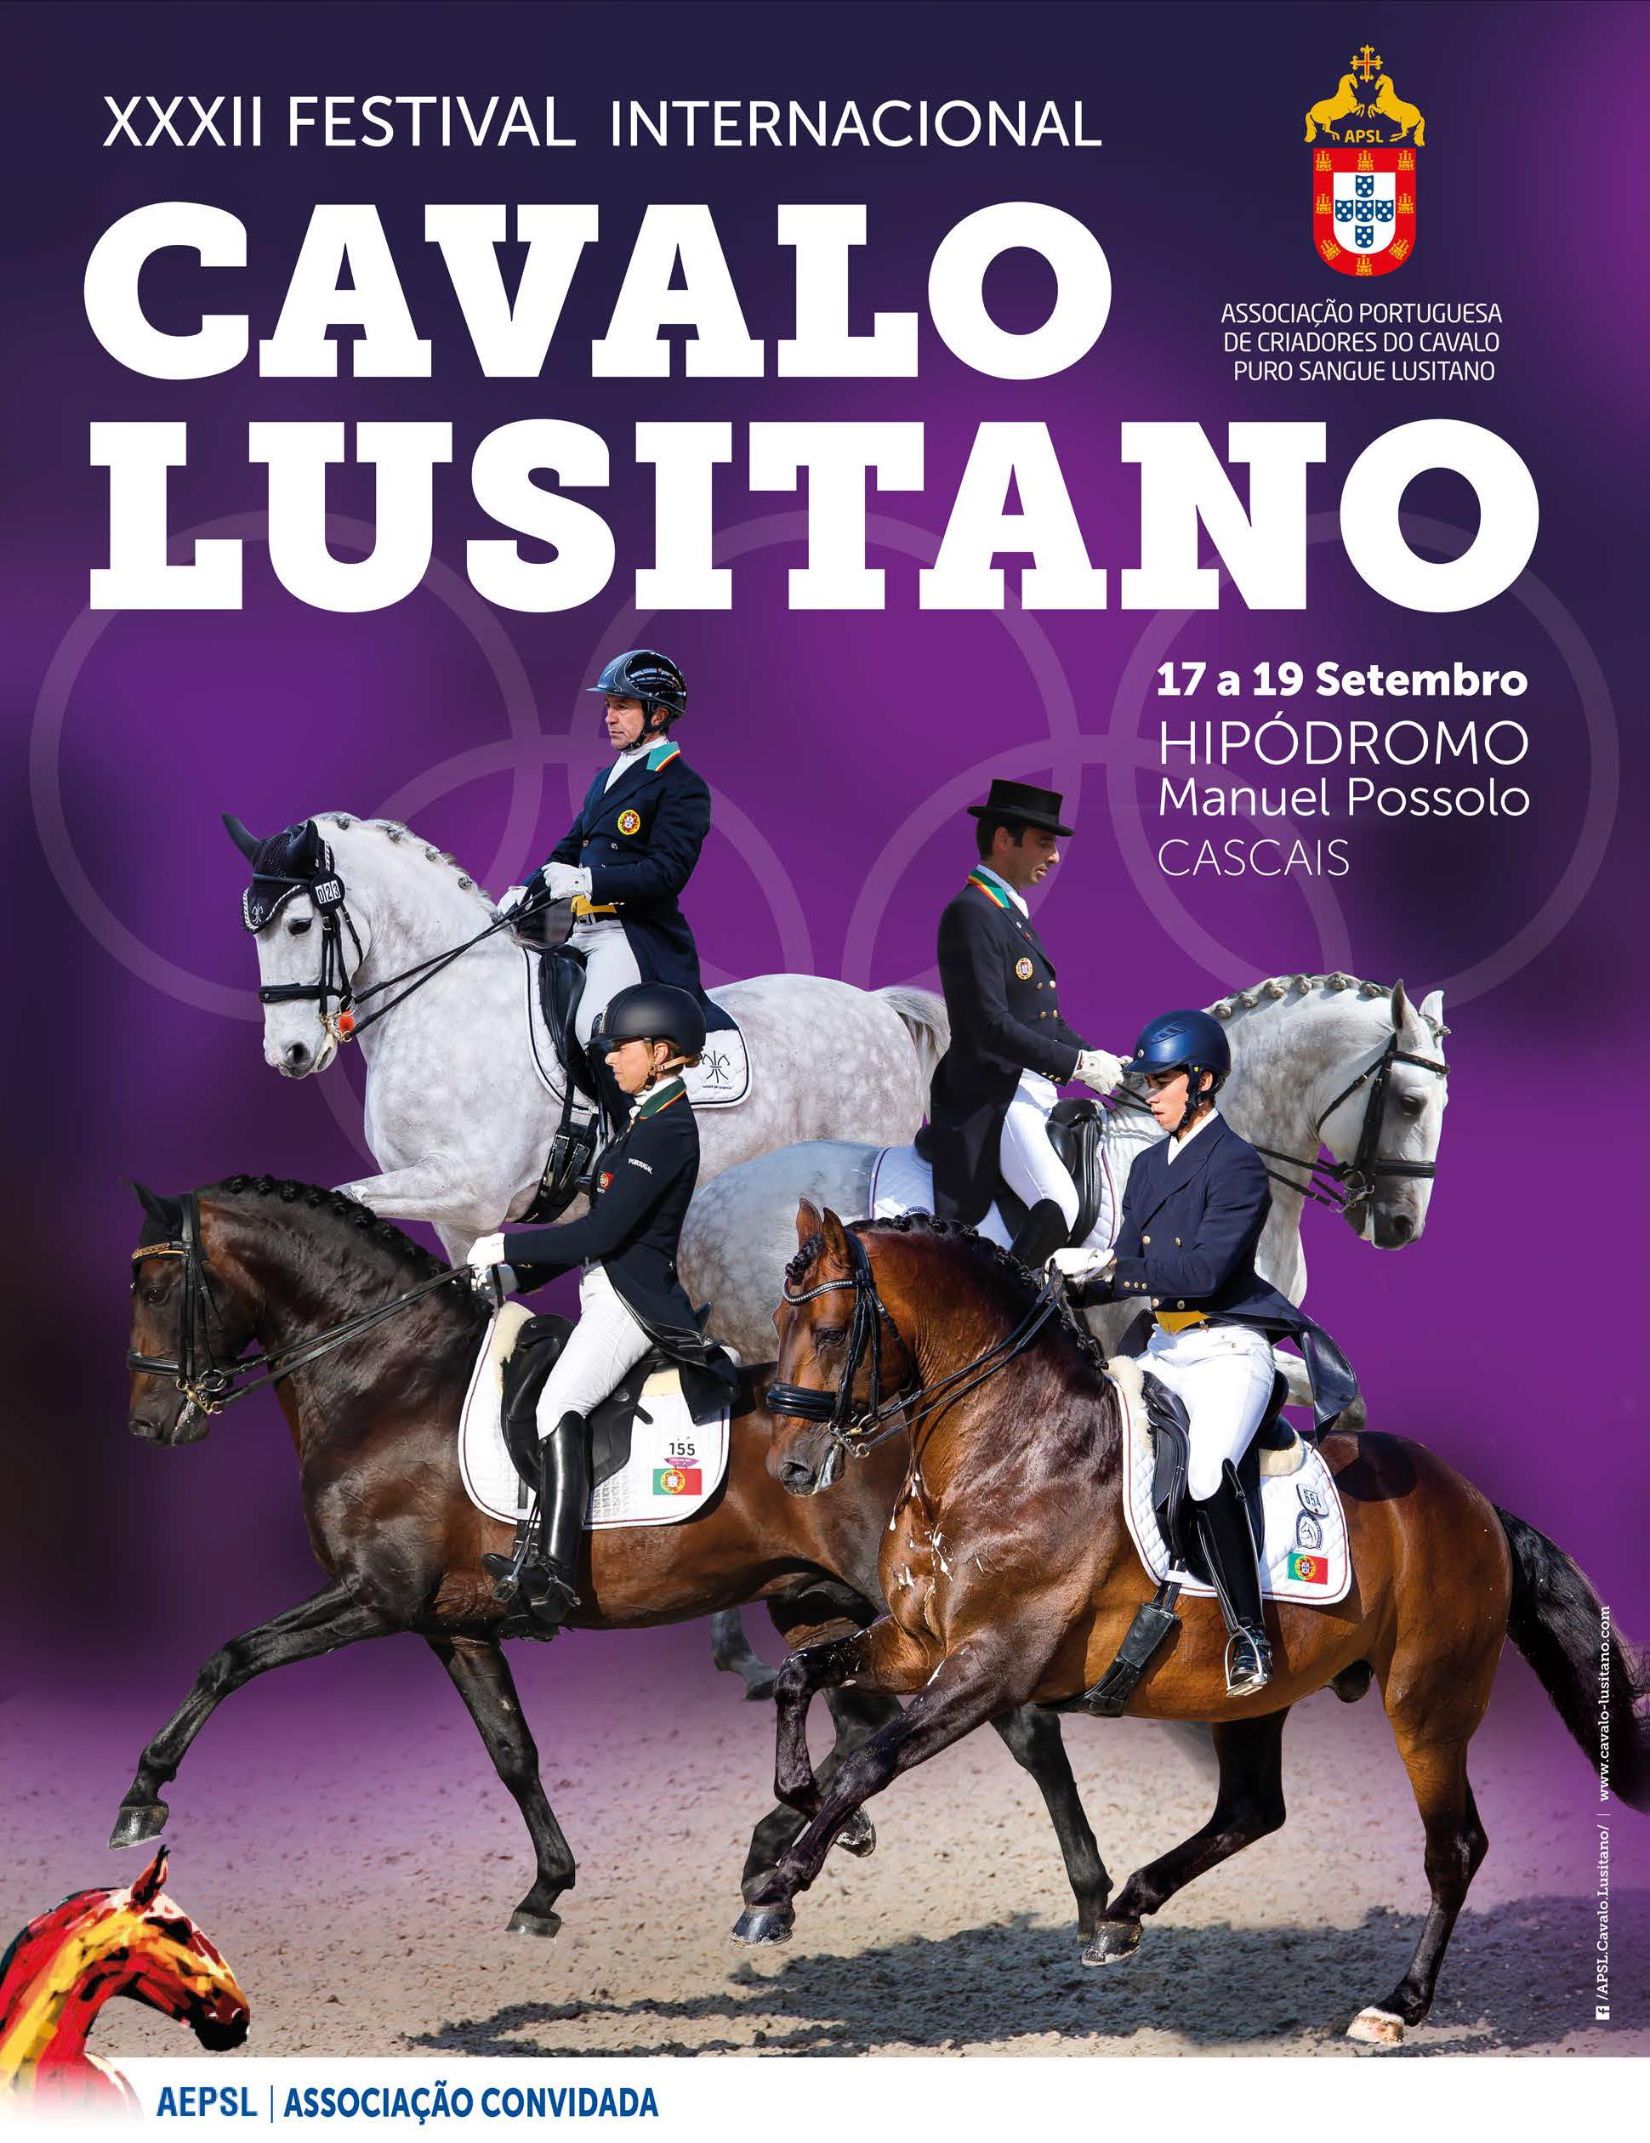 International Lusitano Horse Festival 2021